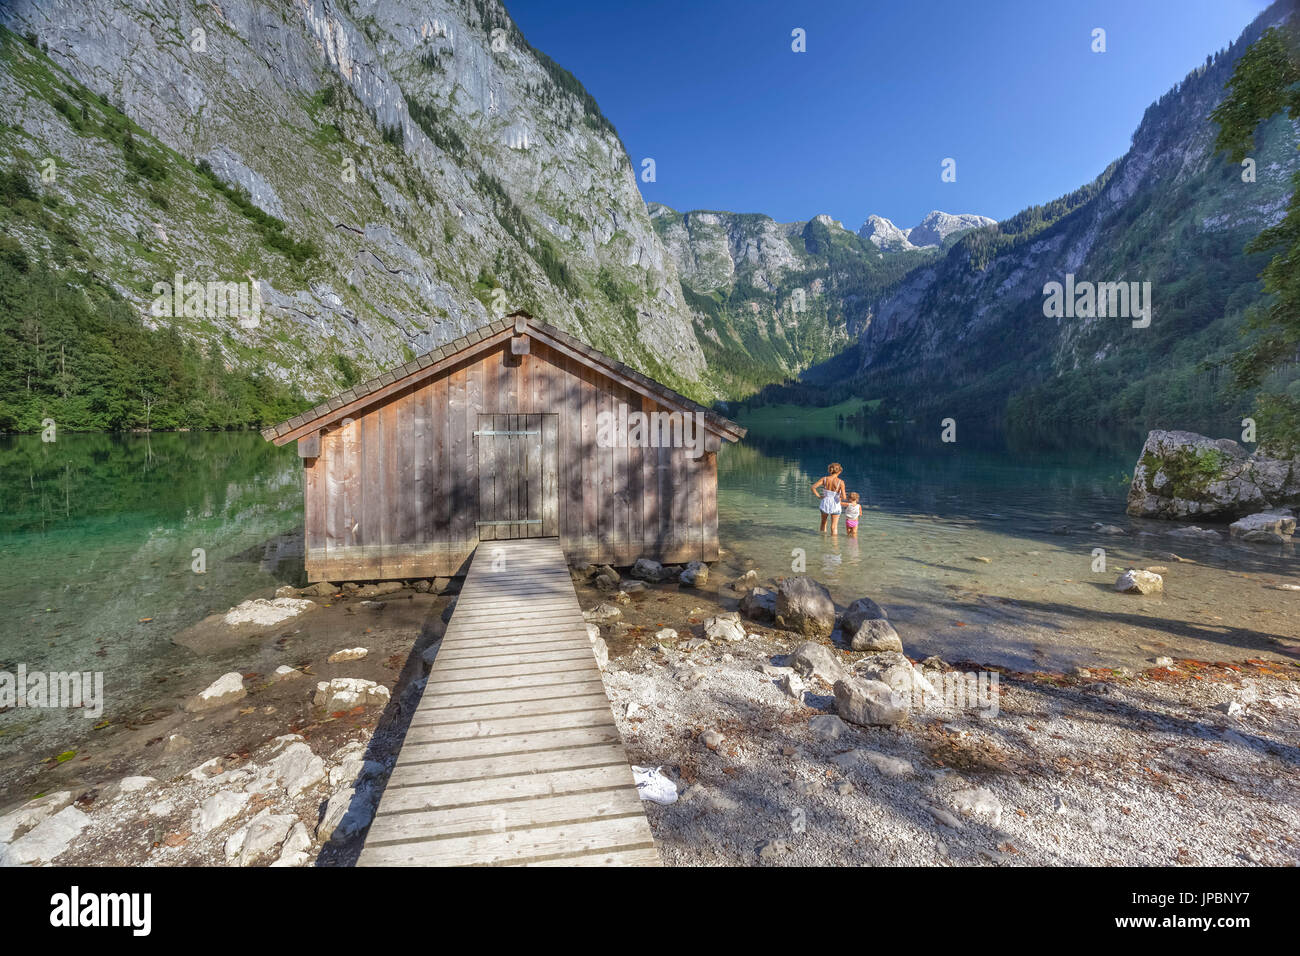 Europe, Germany, Bavaria, Berchtesgaden. Boat dock hangar on Obersee alpine lake in the Alps Stock Photo